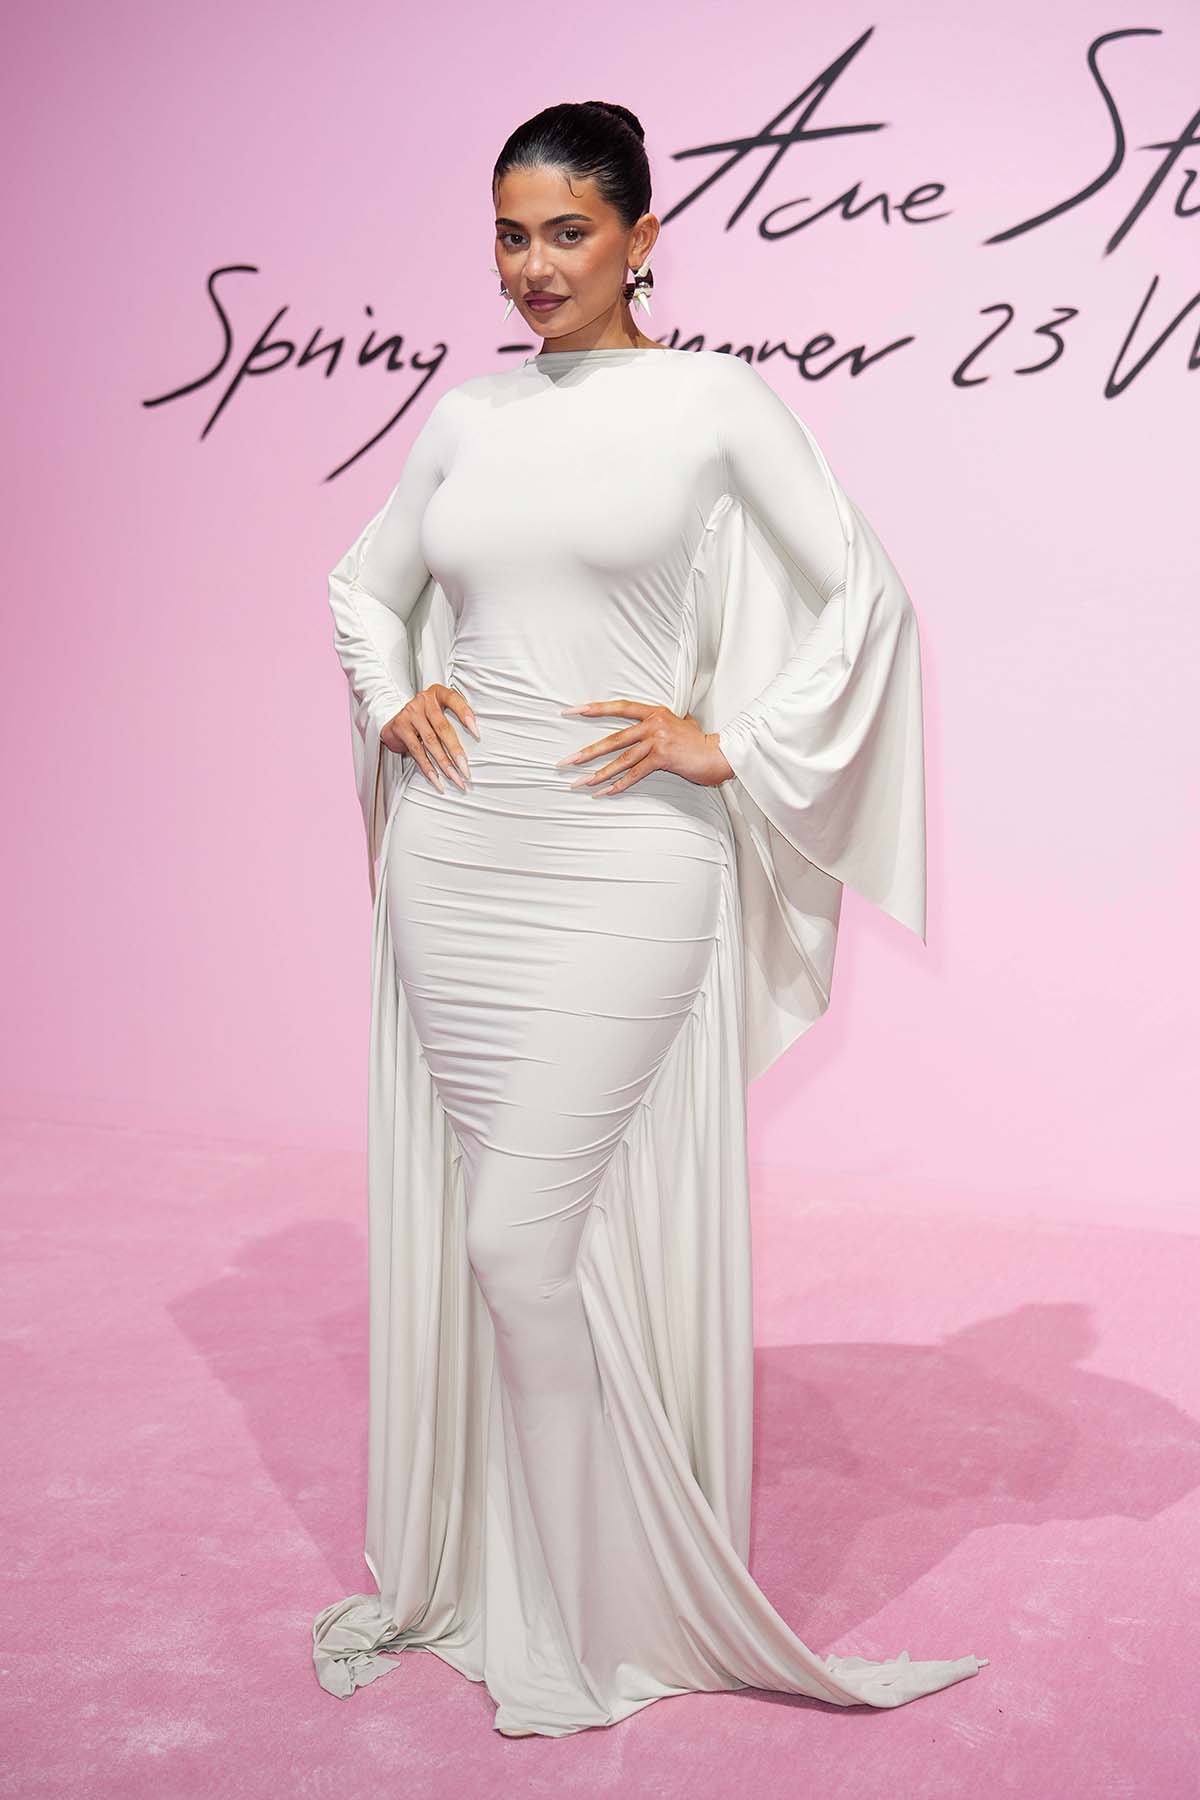 Zendaya Wows in White Dress in Paris for Louis Vuitton Fashion